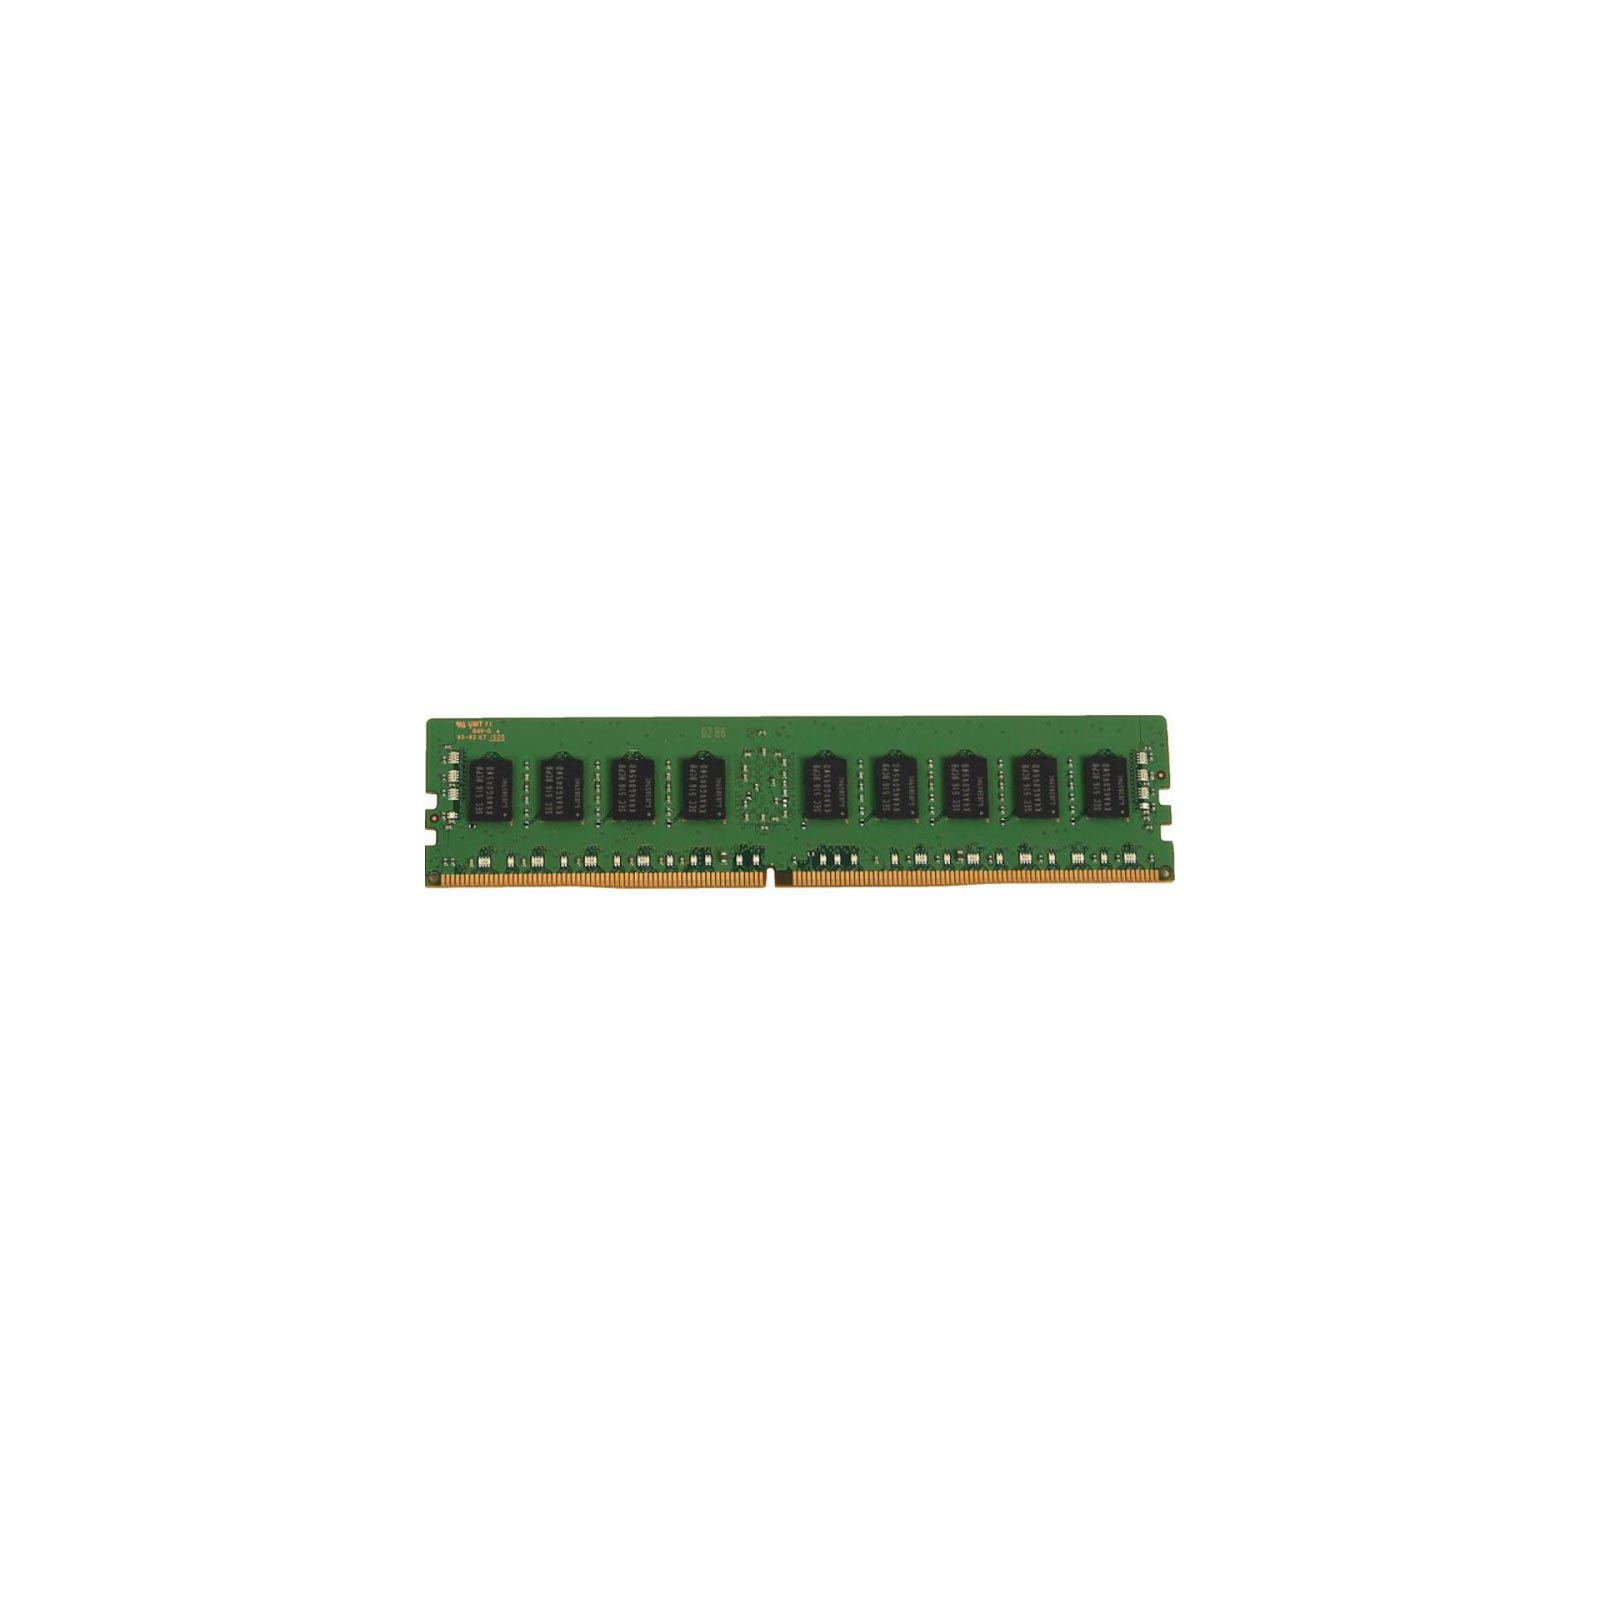 Модуль памяти для сервера DDR4 16GB ECC RDIMM 3200MHz 1Rx4 1.2V CL22 Kingston (KSM32RS4/16MEI)